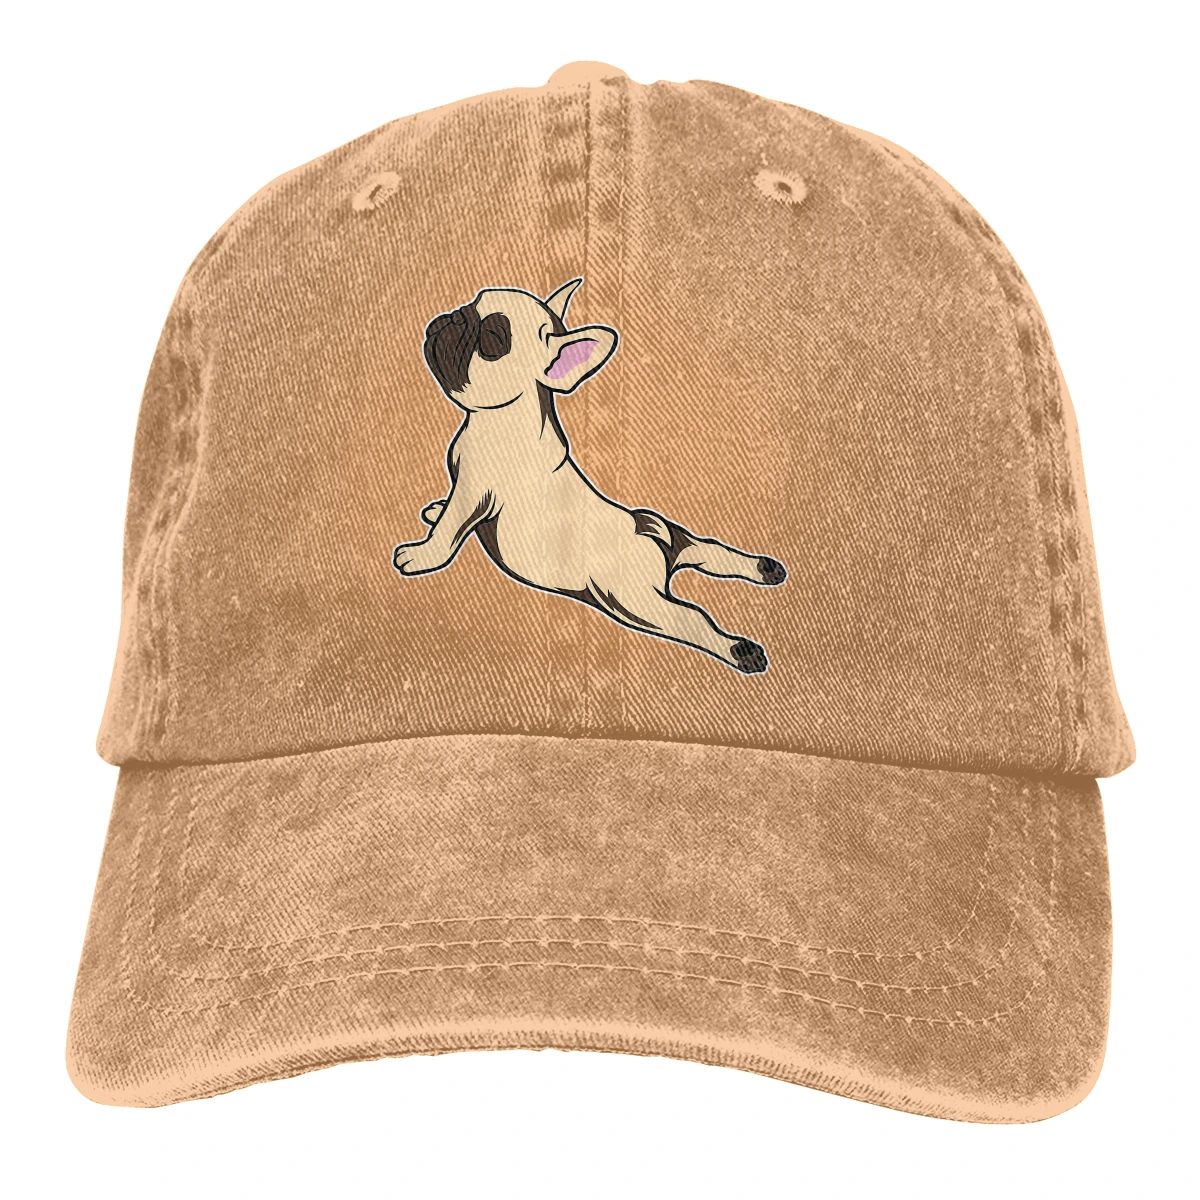 Funny Frenchie T The Baseball Cap Peaked capt Unisex Sport Outdoor Custom French Bulldog Yoga Funny Animal Sports Hats